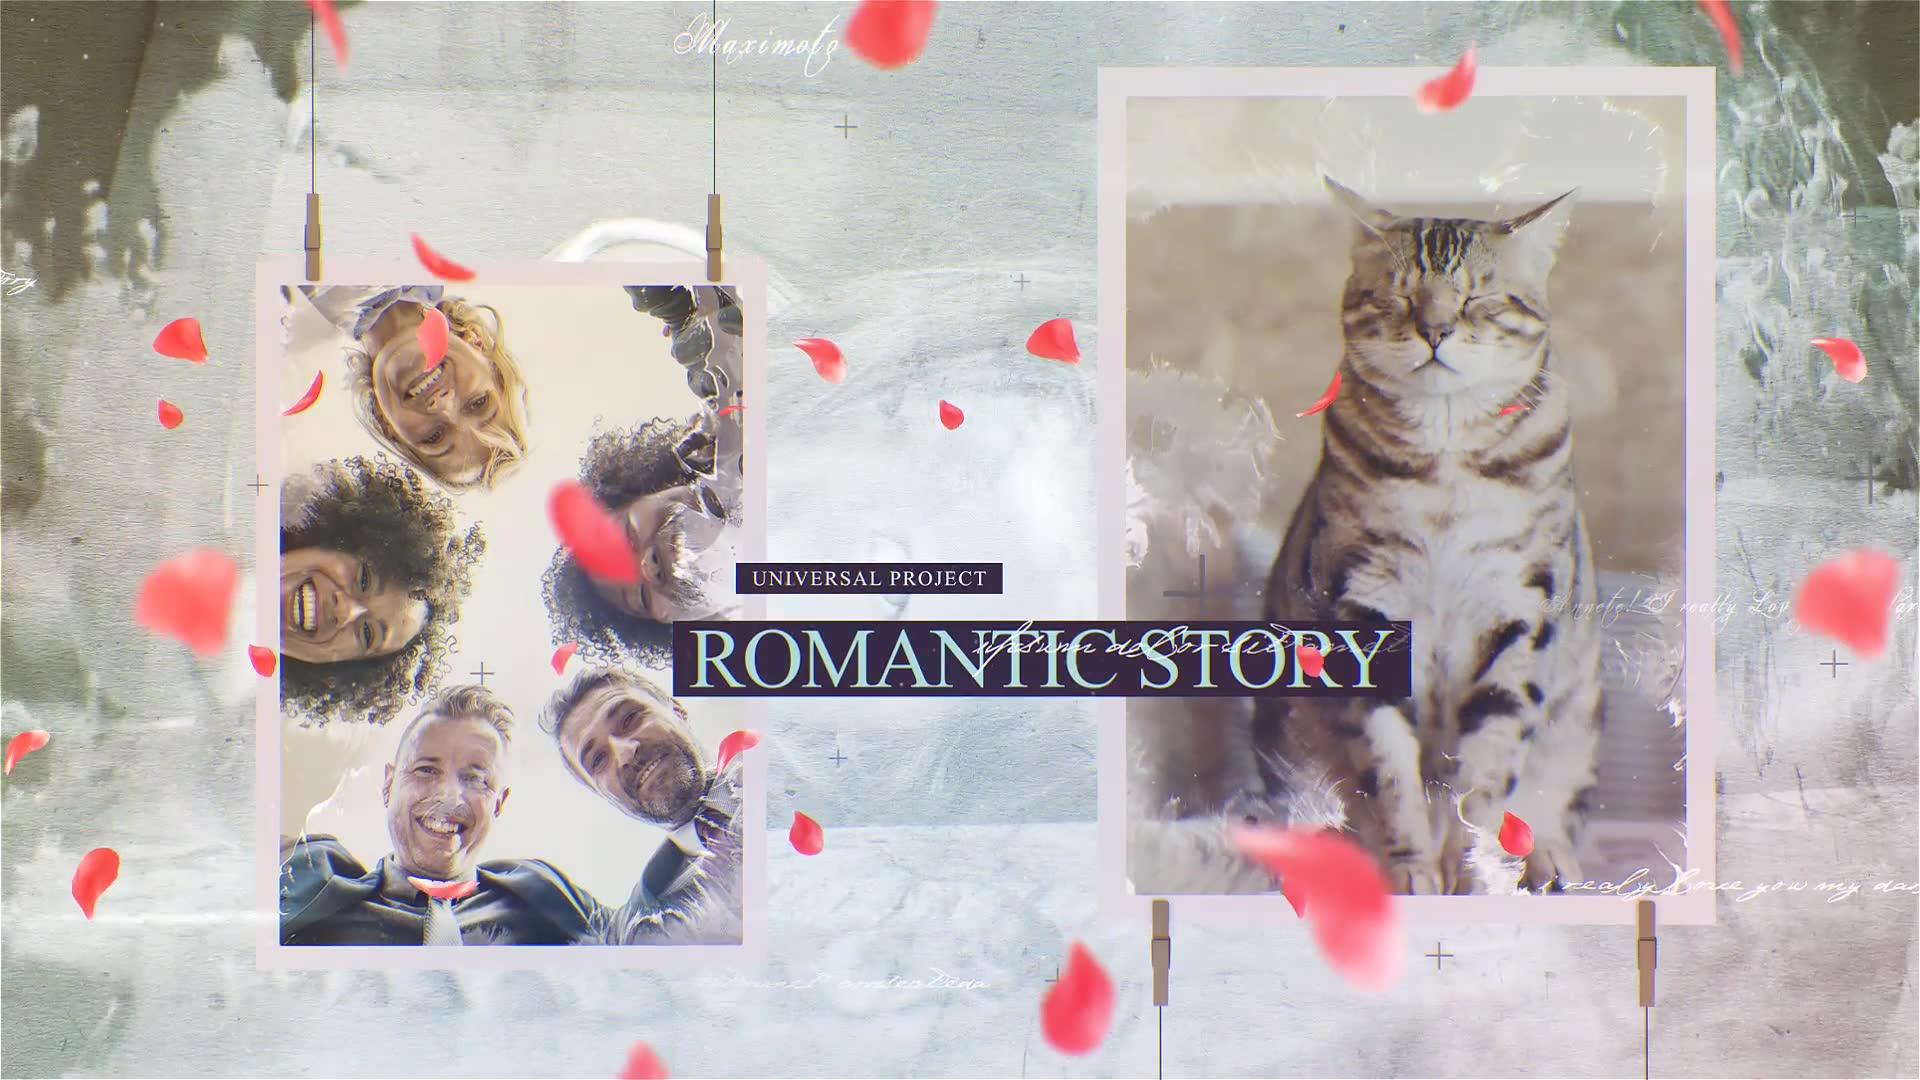 Petals Emotional Slideshow - Download Videohive 23101149